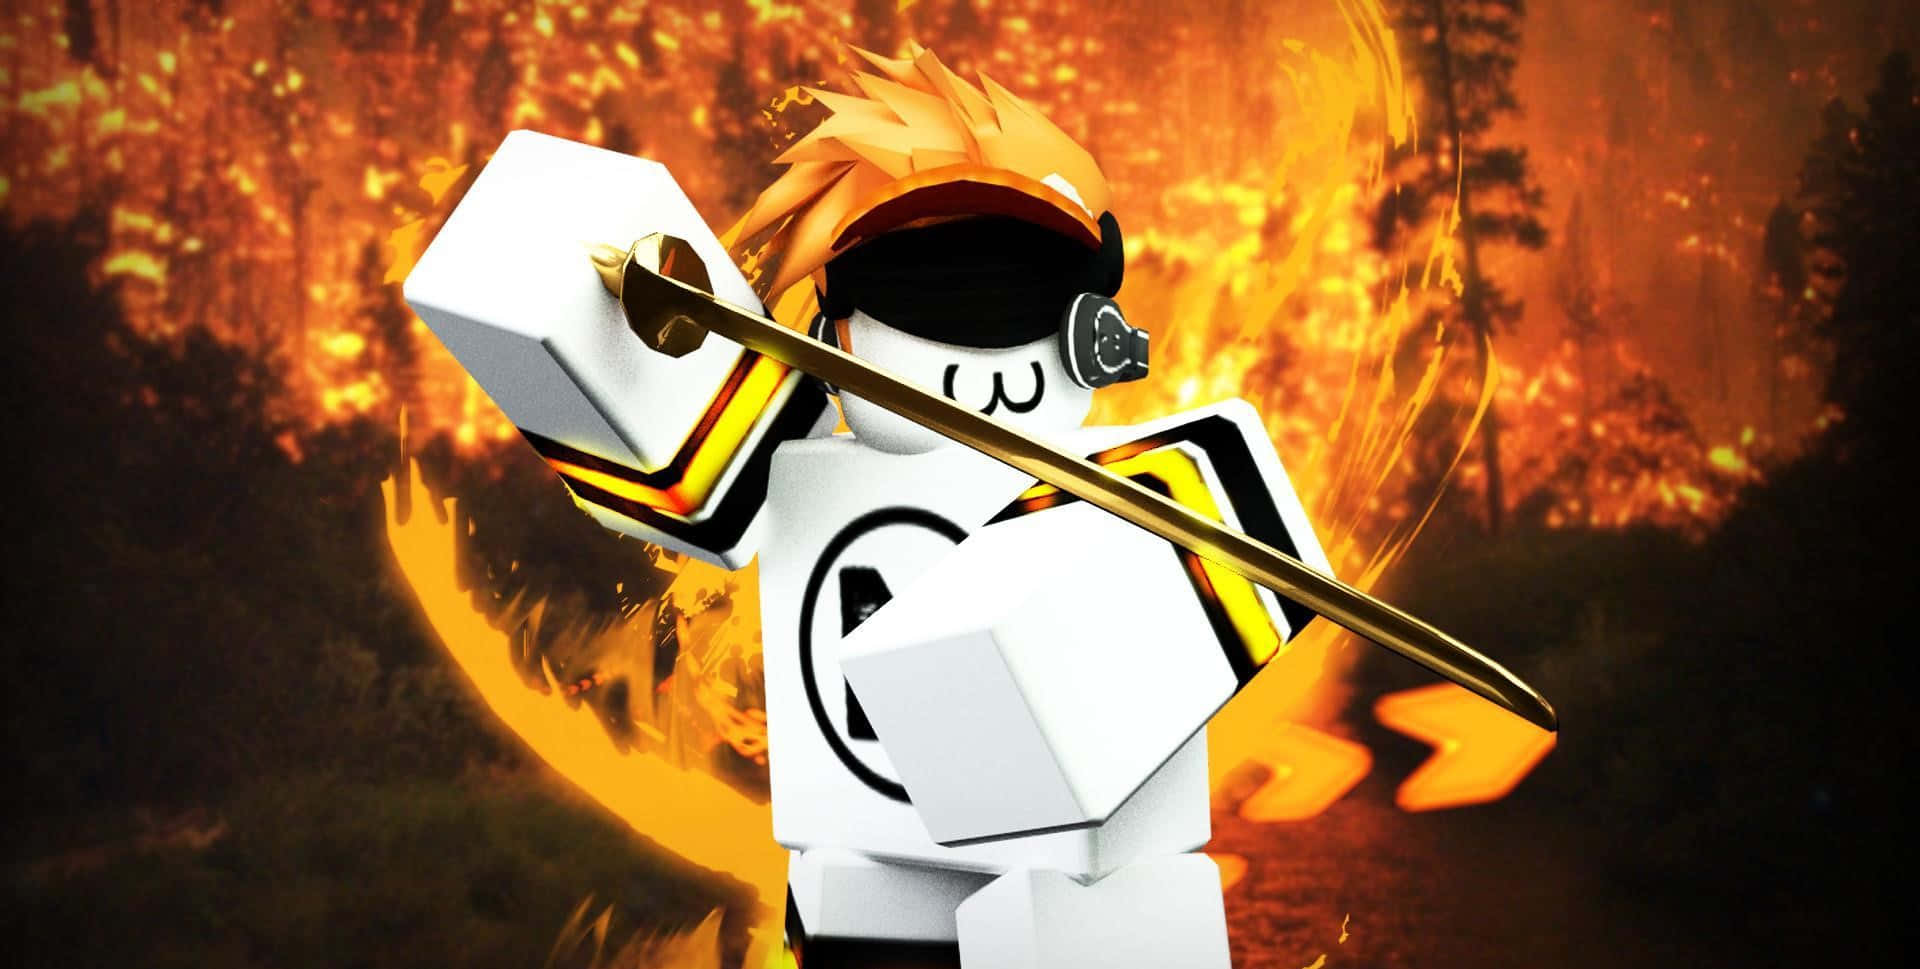 Lego Firefighter Heroic Pose